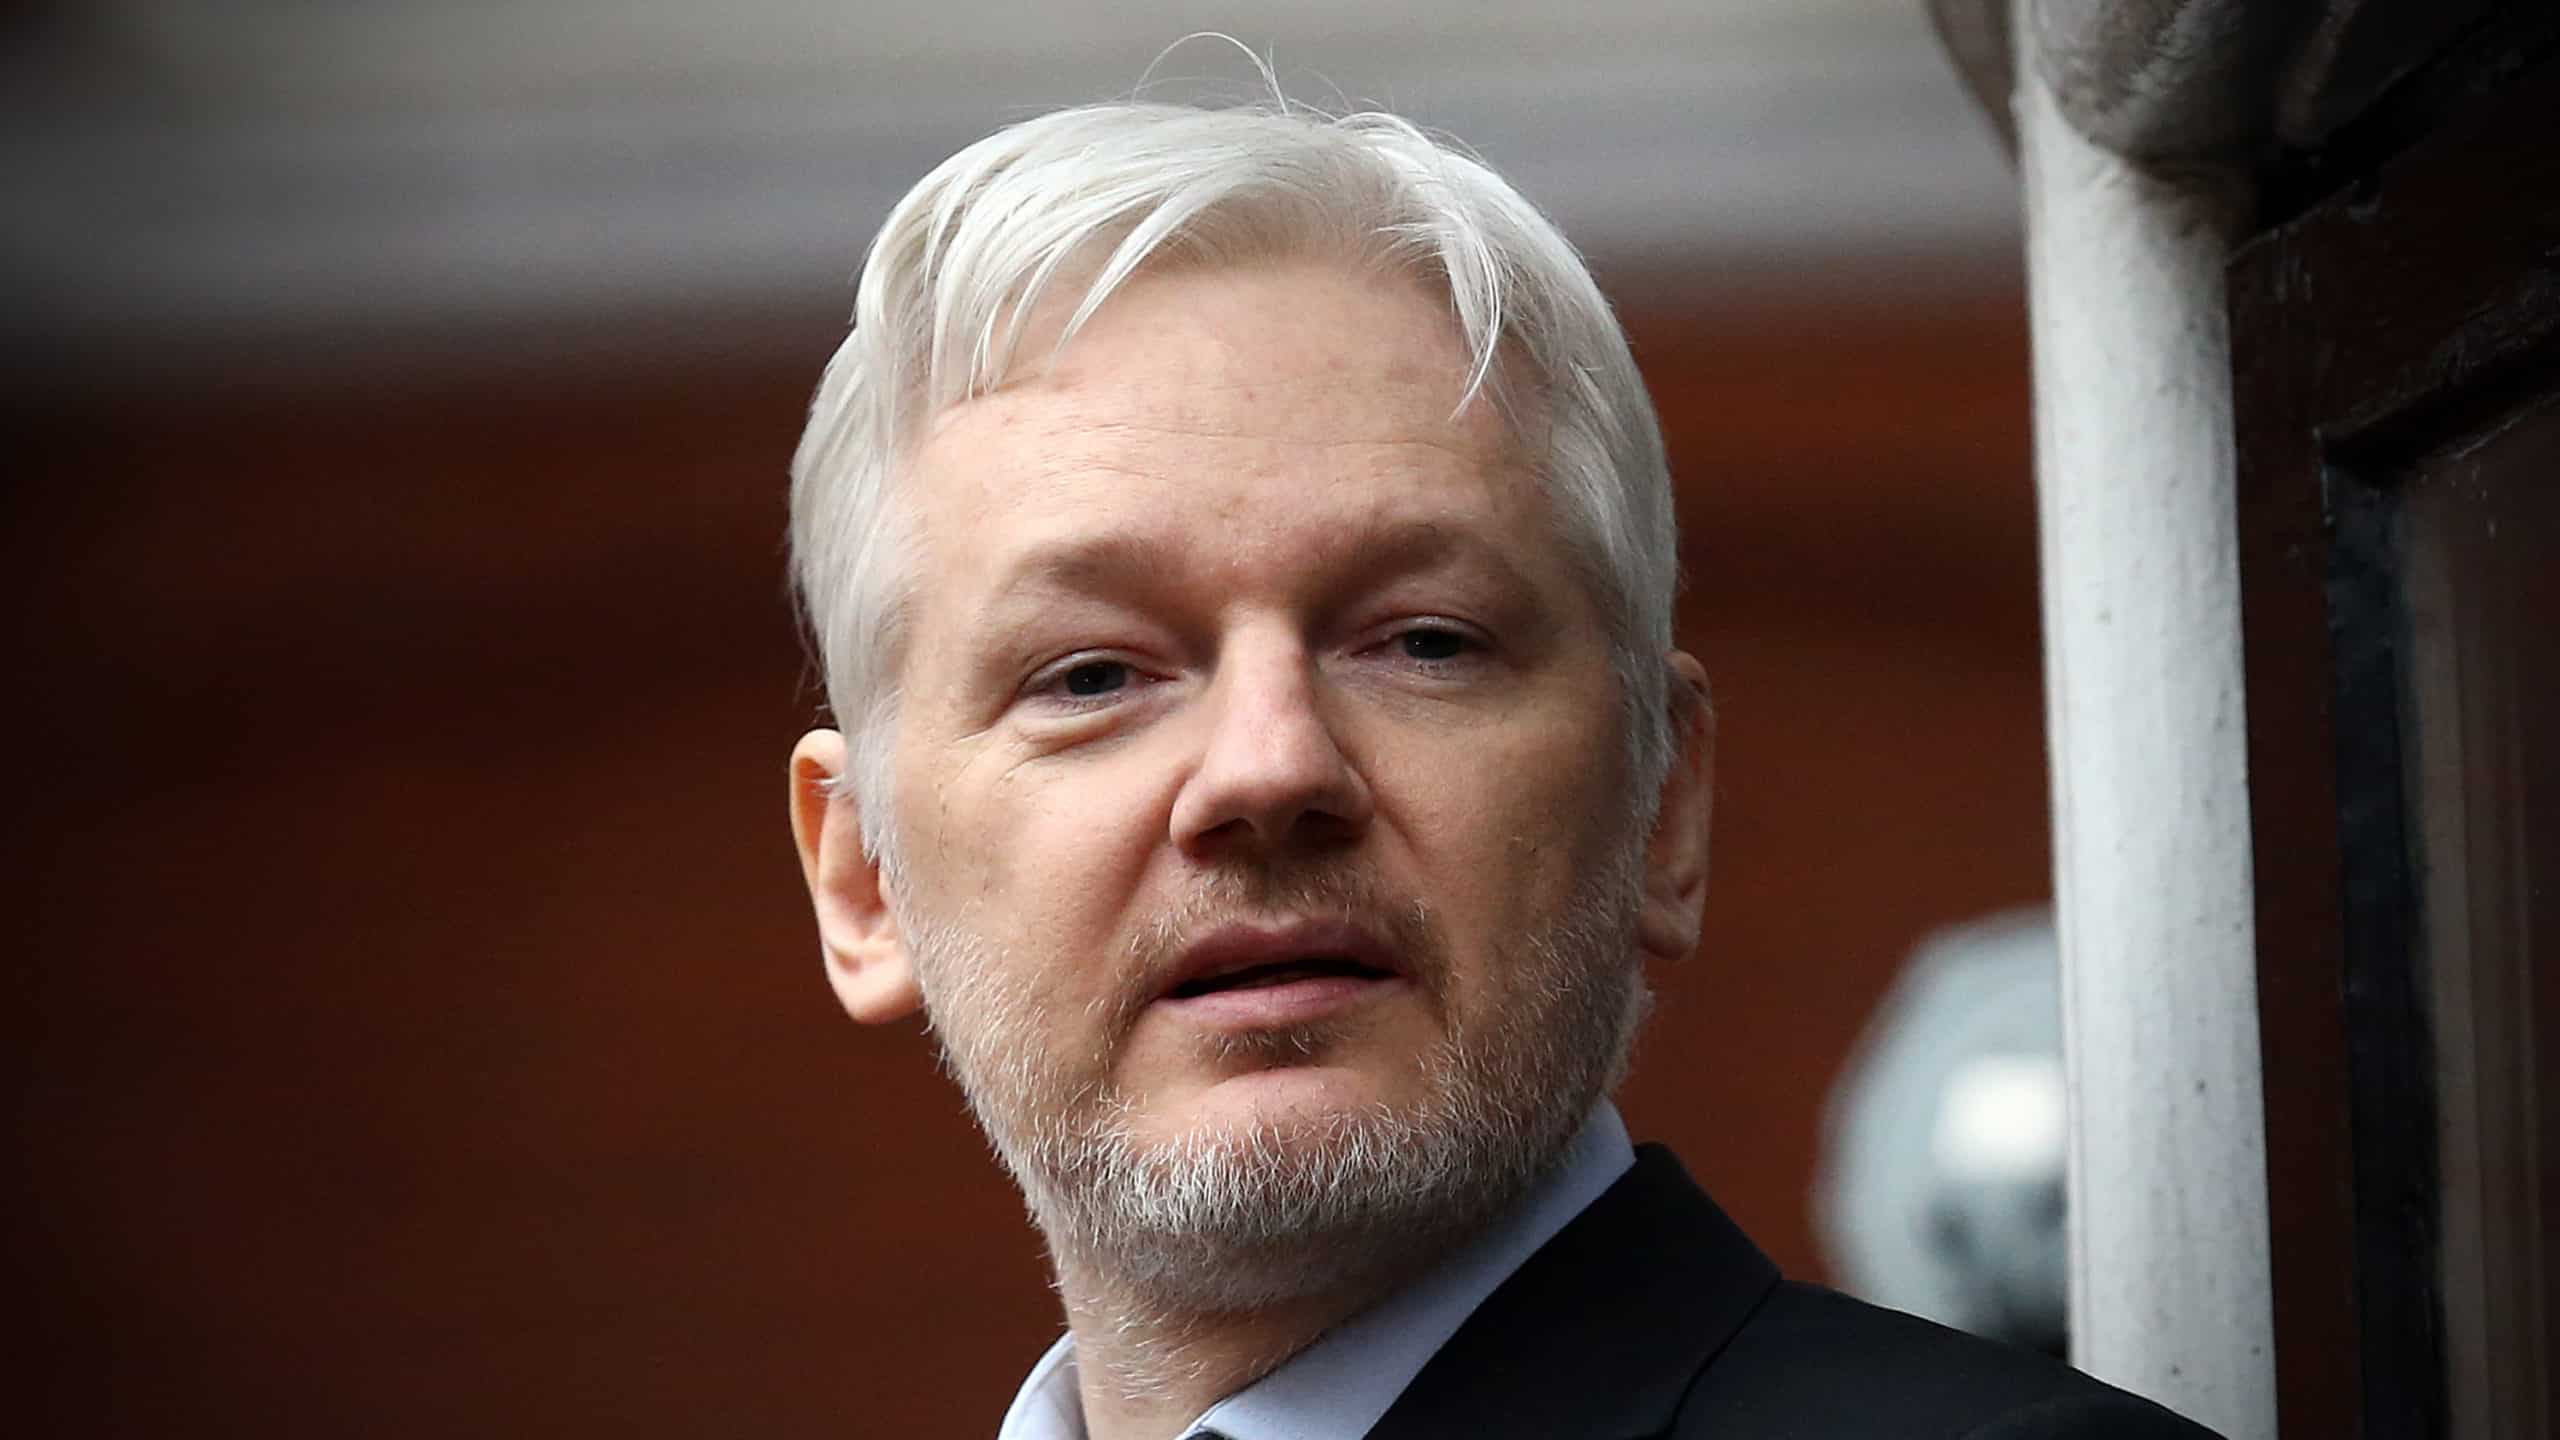 Dao-to-free-julian-assange-raises-over-$38-million